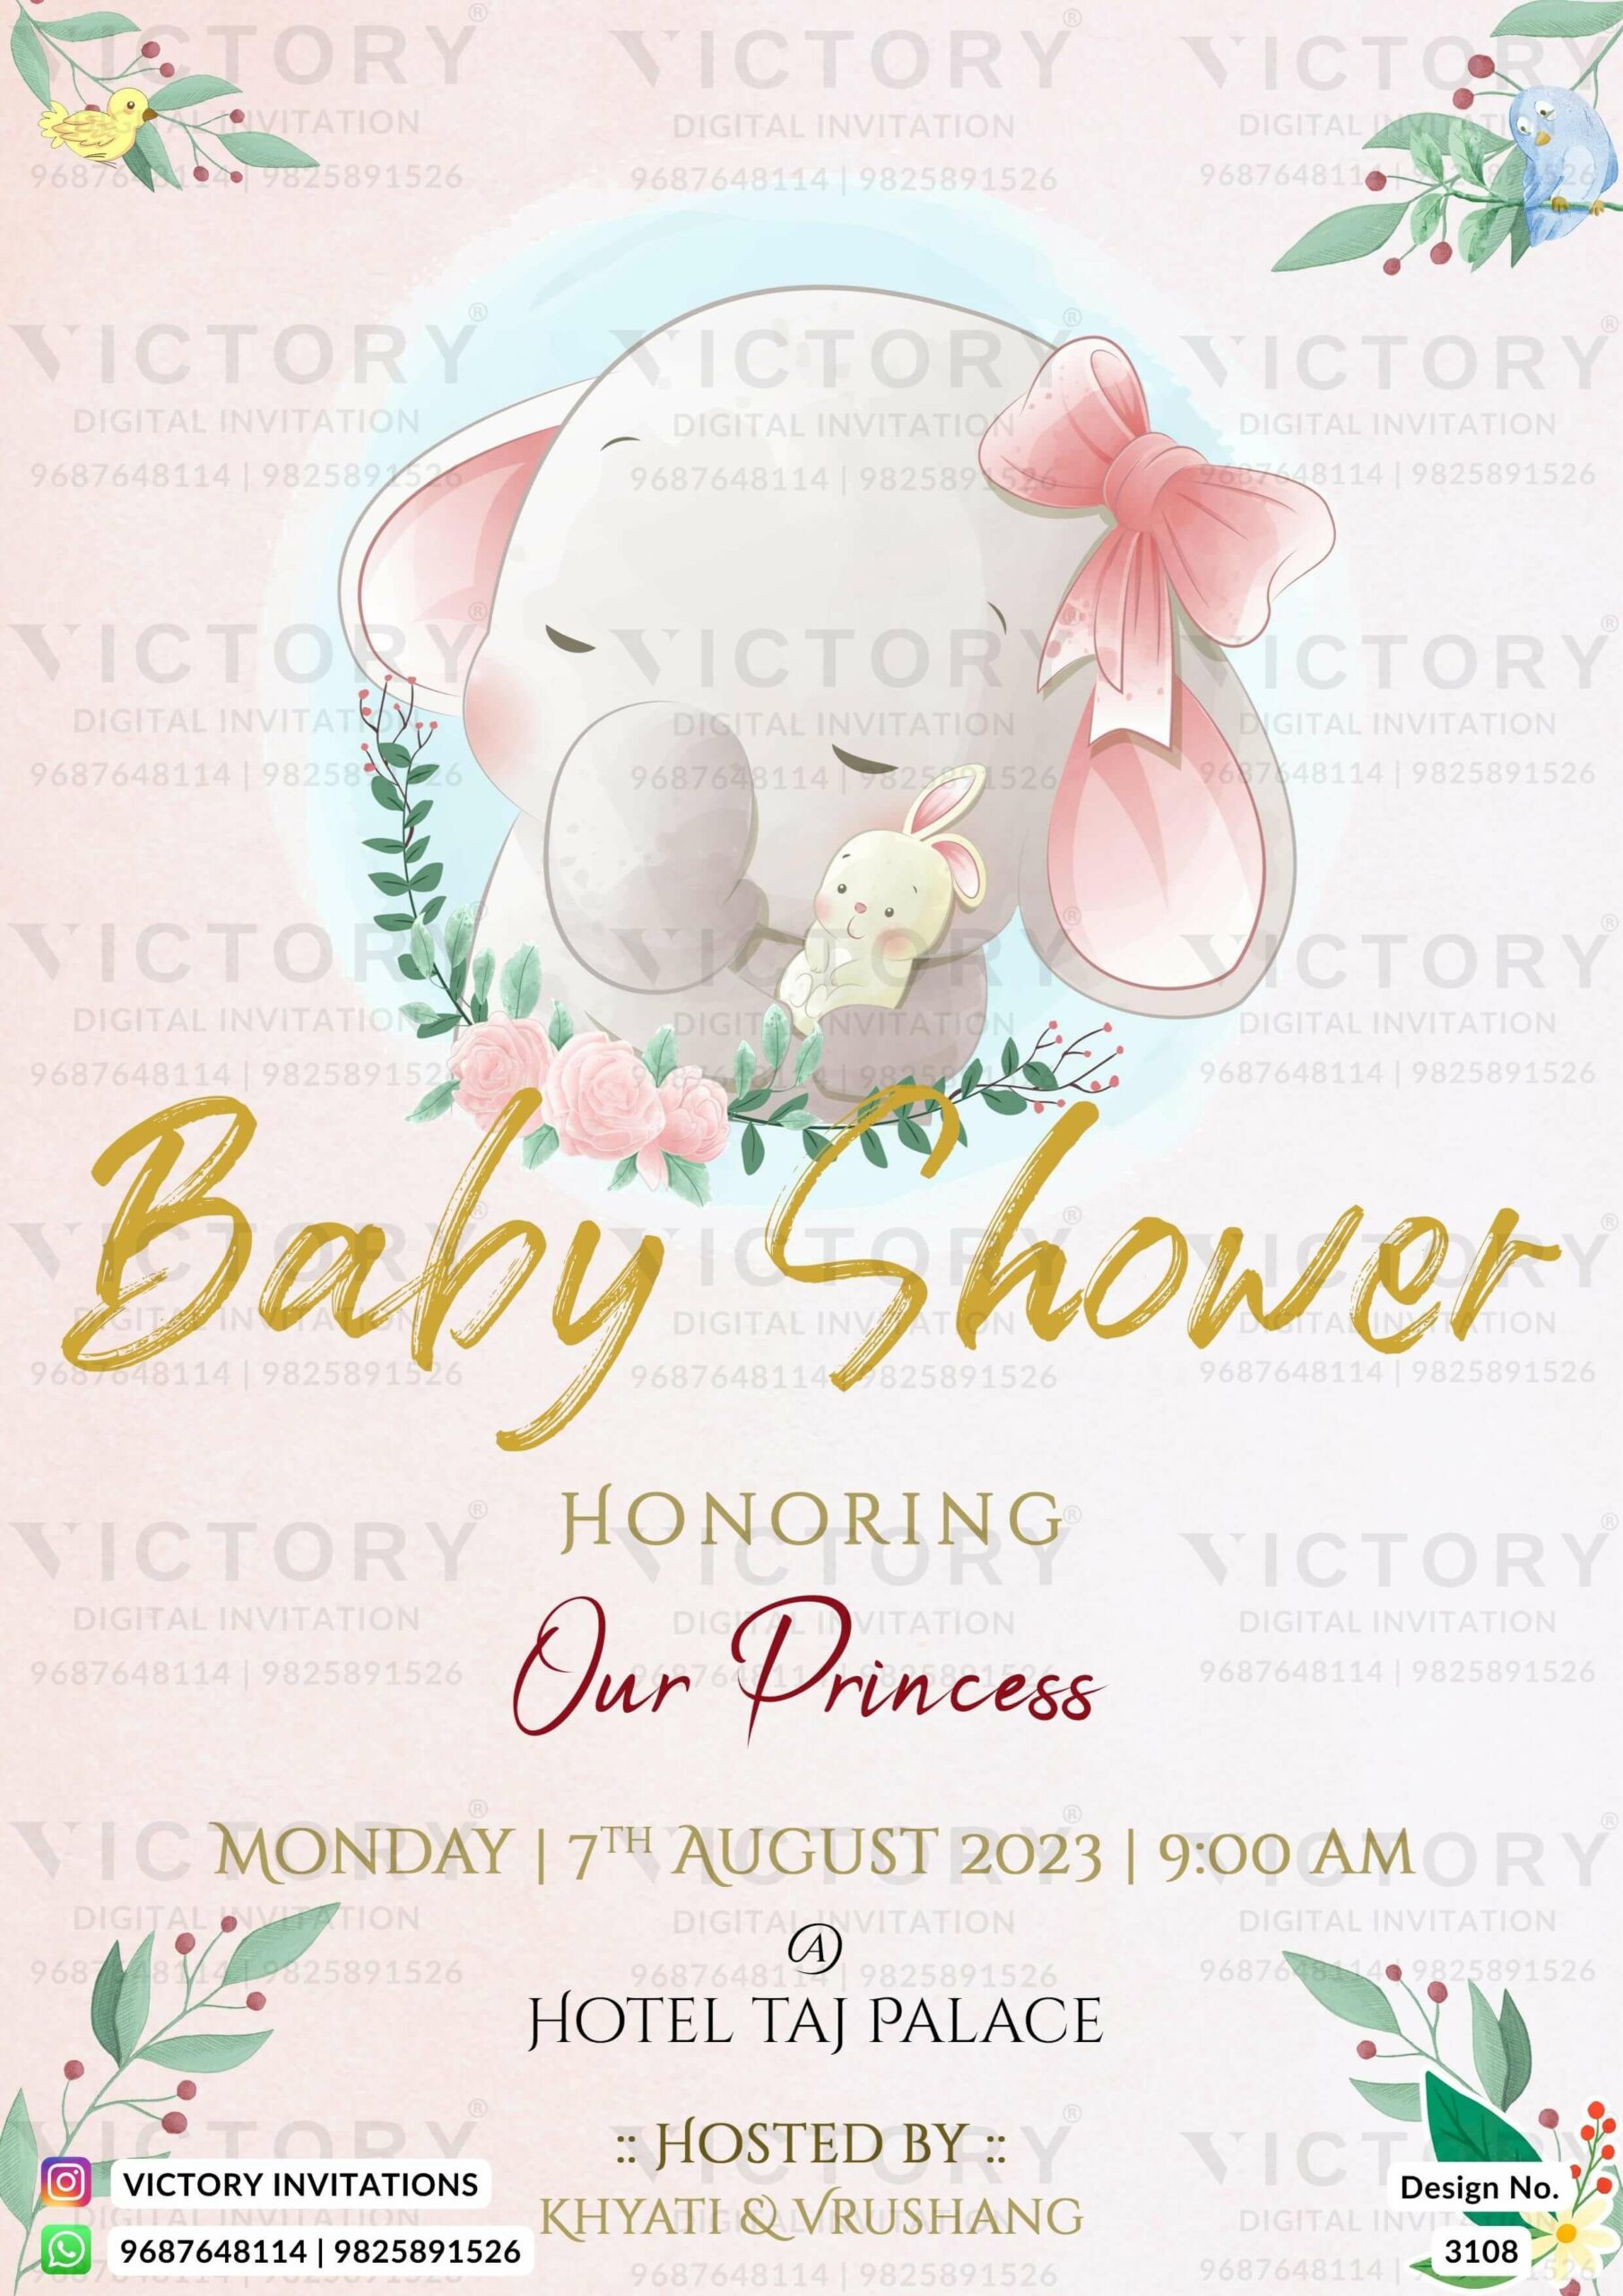 Baby Shower digital invitation card in english design no.3108